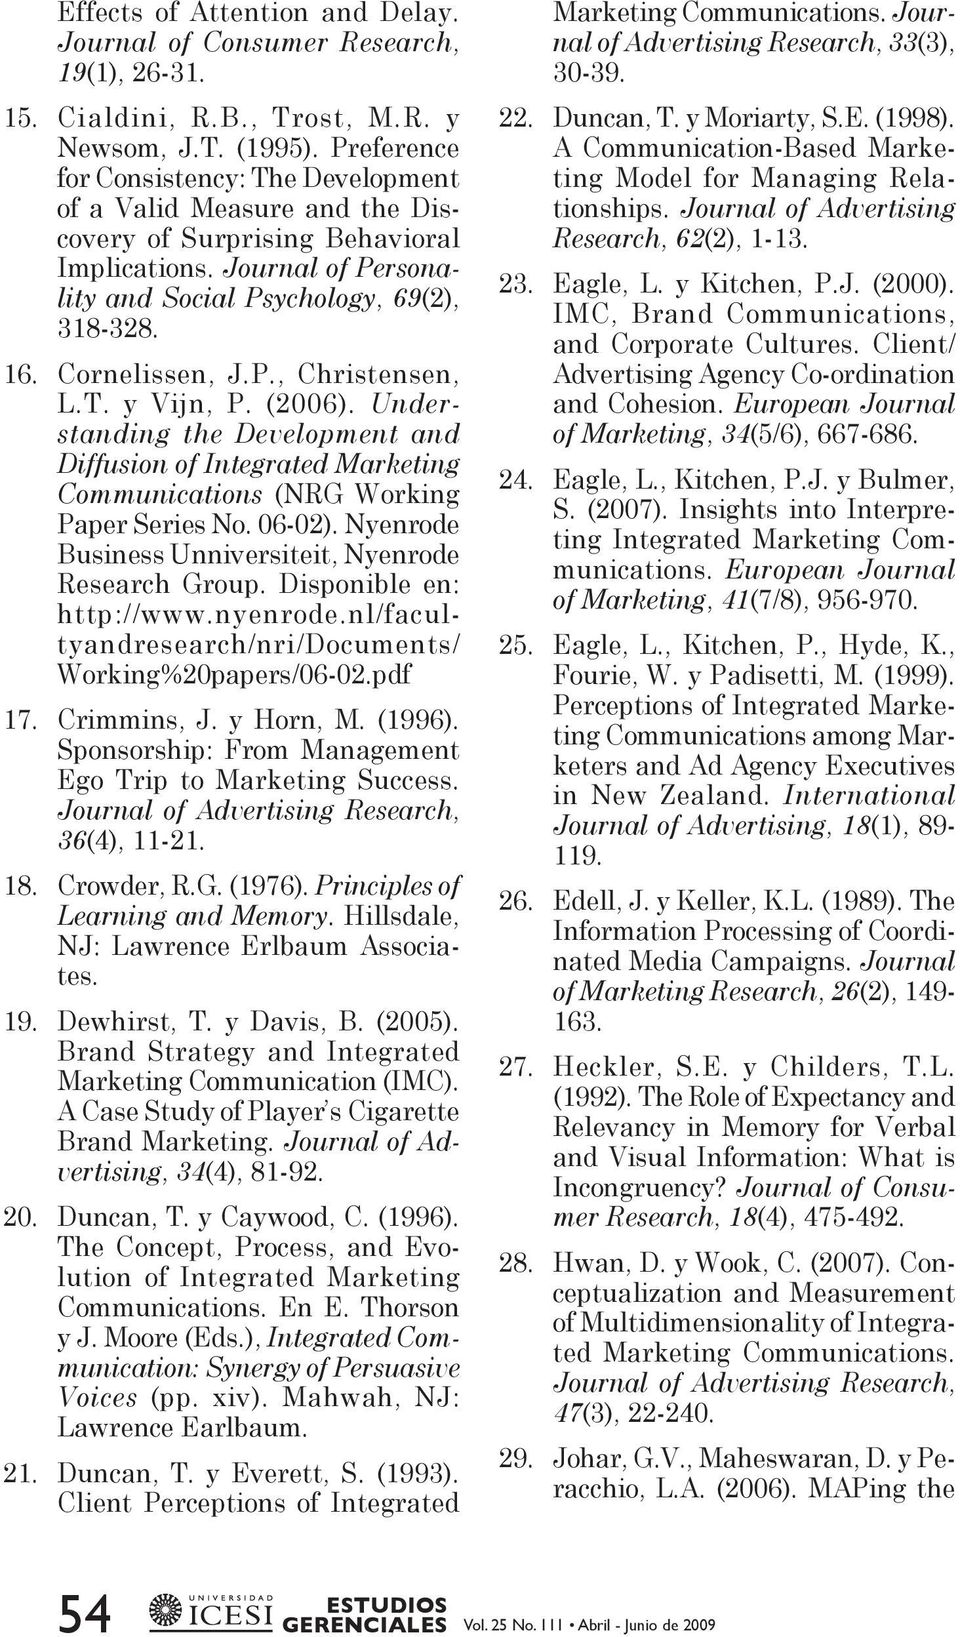 Cornelissen, J.P., Christensen, L.T. y Vijn, P. (2006). Understanding the Development and Diffusion of Integrated Marketing Communications (NRG Working Paper Series No. 06-02).